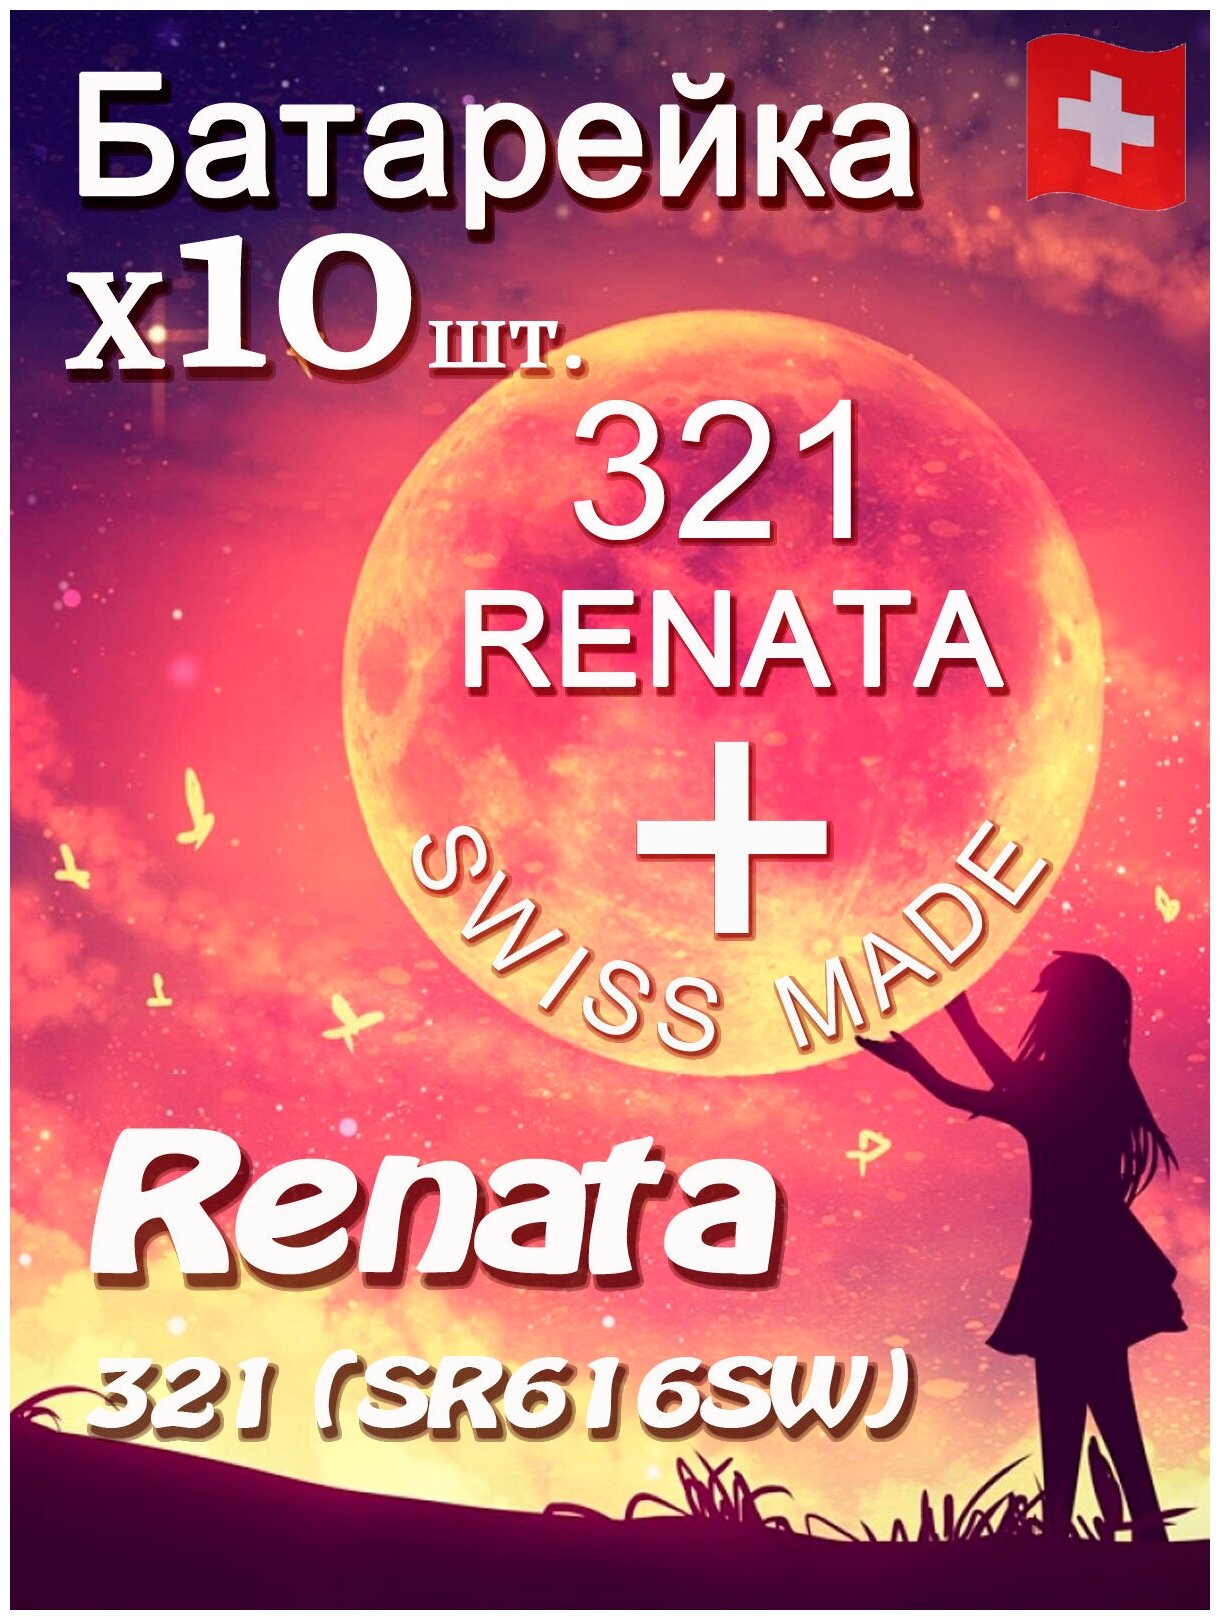 Батарейка Renata 321 10шт/Элемент питания рената 321 В10 (SR616SW)(без ртути) 10шт